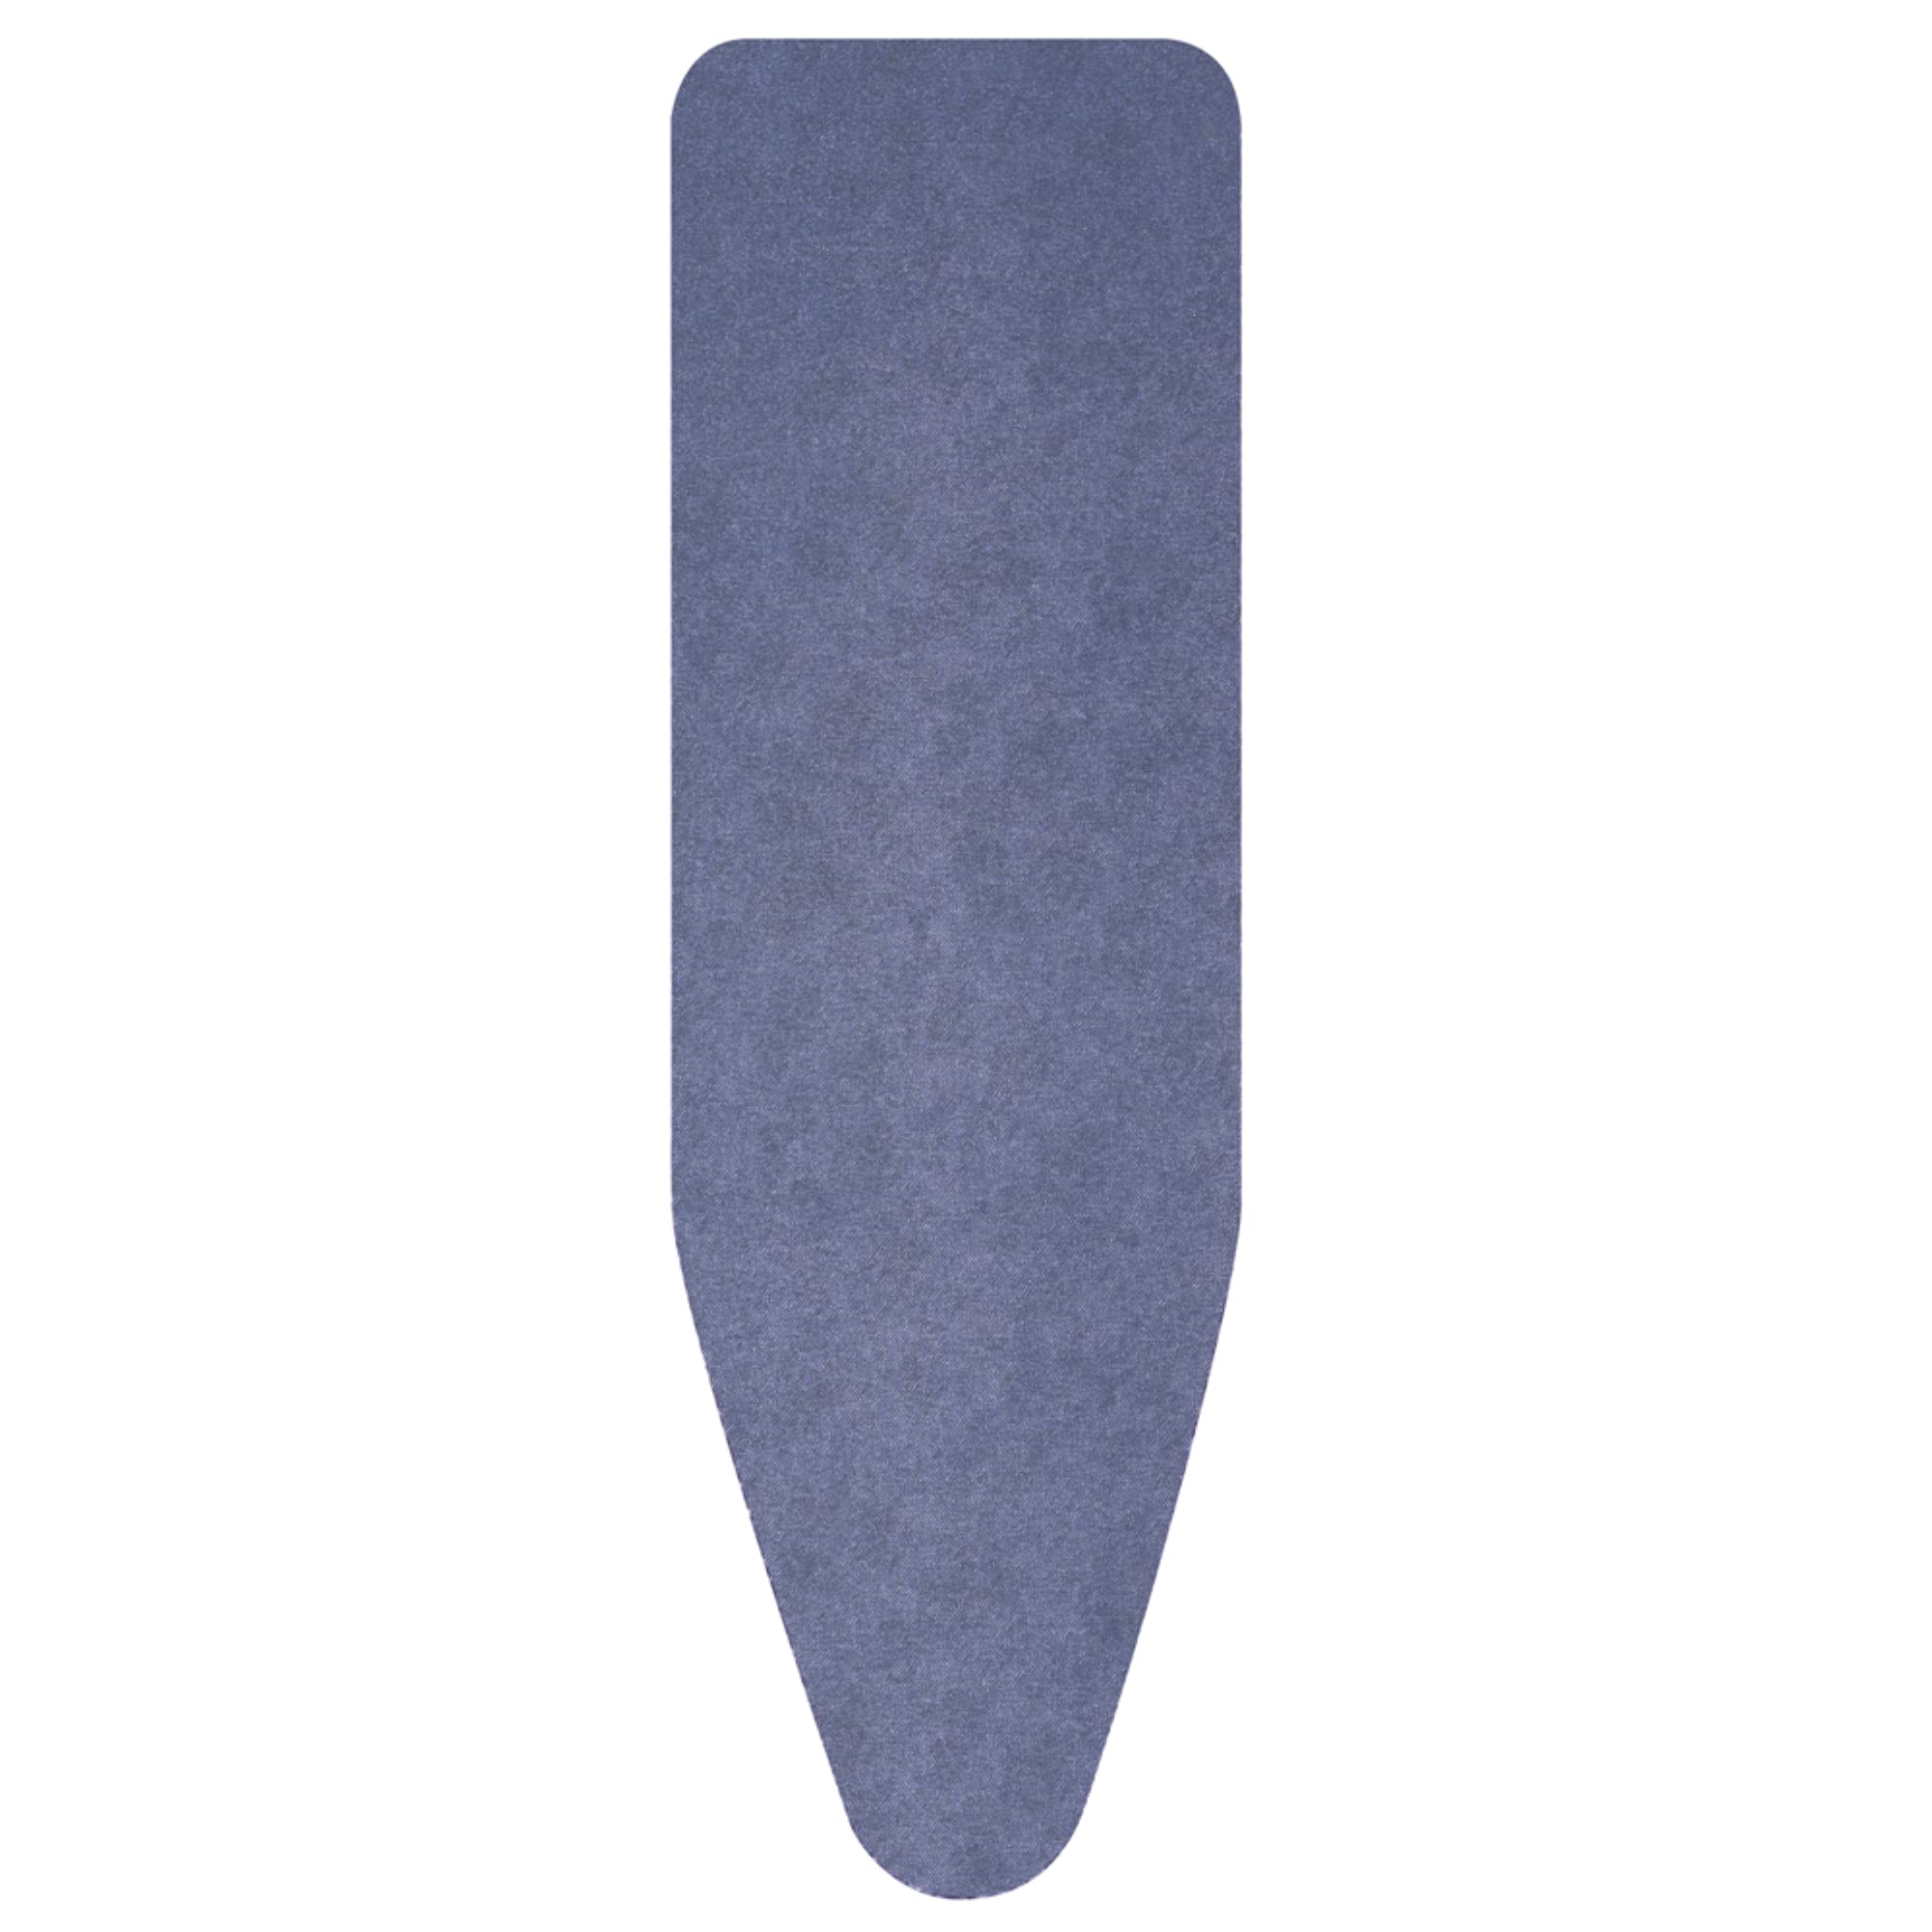 Brabantia Thick Foam & Felt Padding Ironing Board Cover, Size C (49 x 18 in), Denim Blue